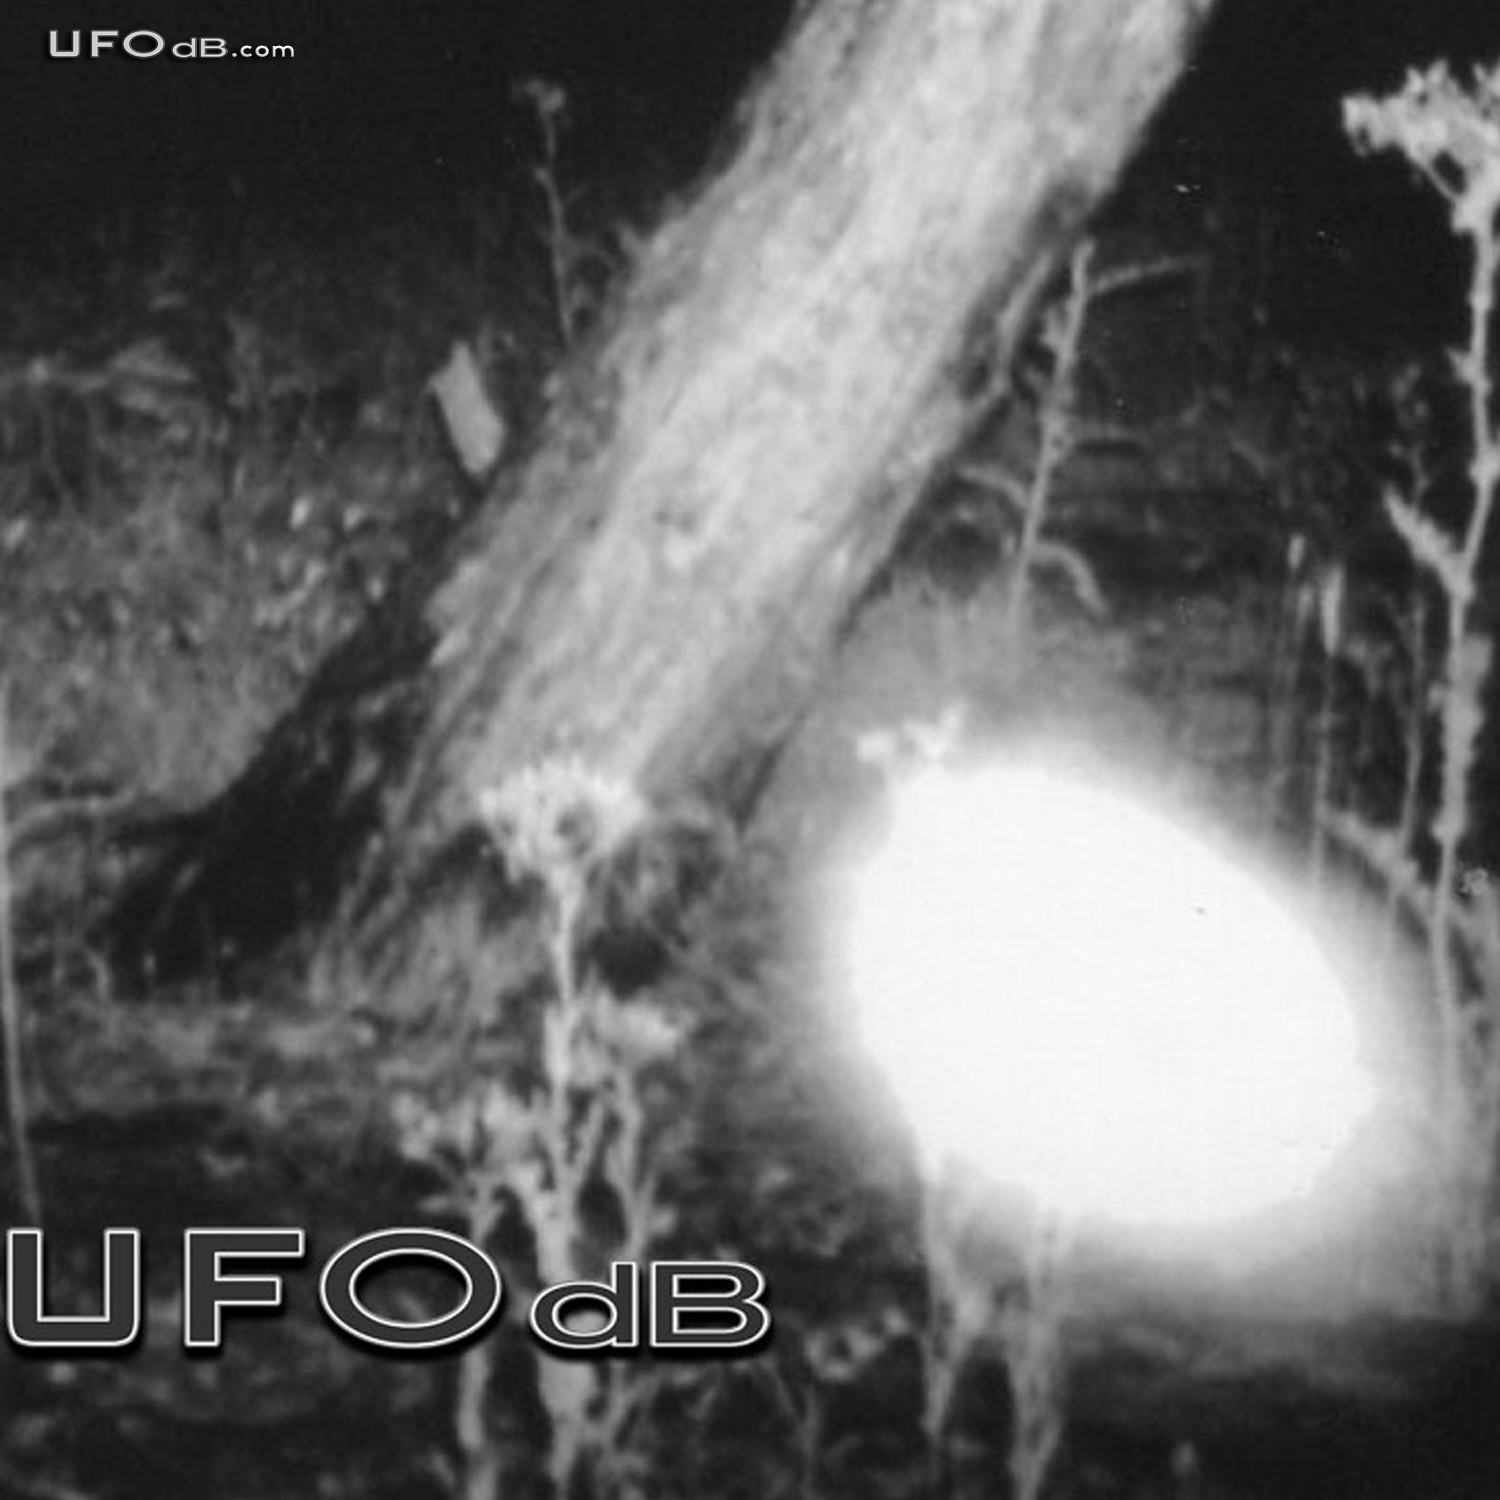 Intelligently Controlled UFO probe seen in Stawell | Australia | 2008 UFO Picture #319-3